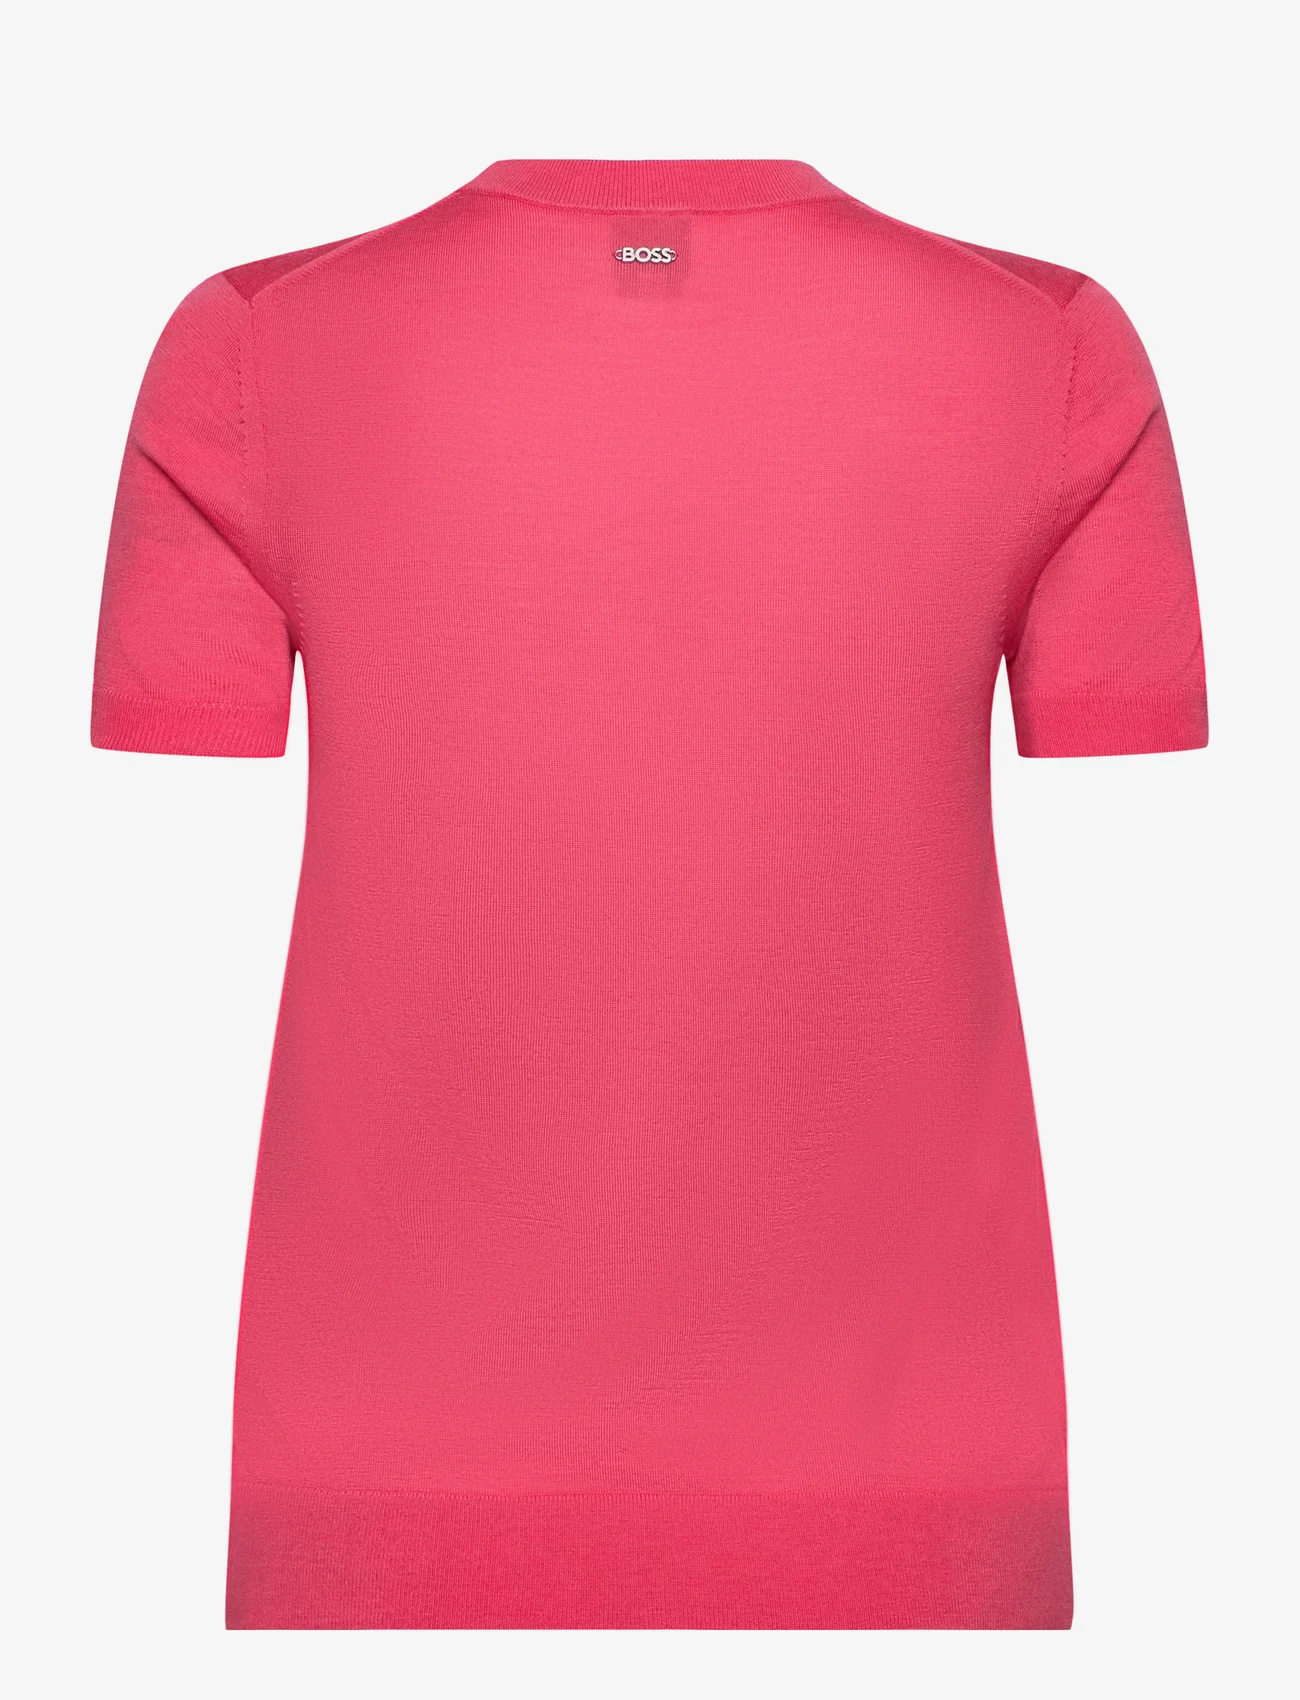 BOSS - Falyssiasi - jumpers - bright pink - 1